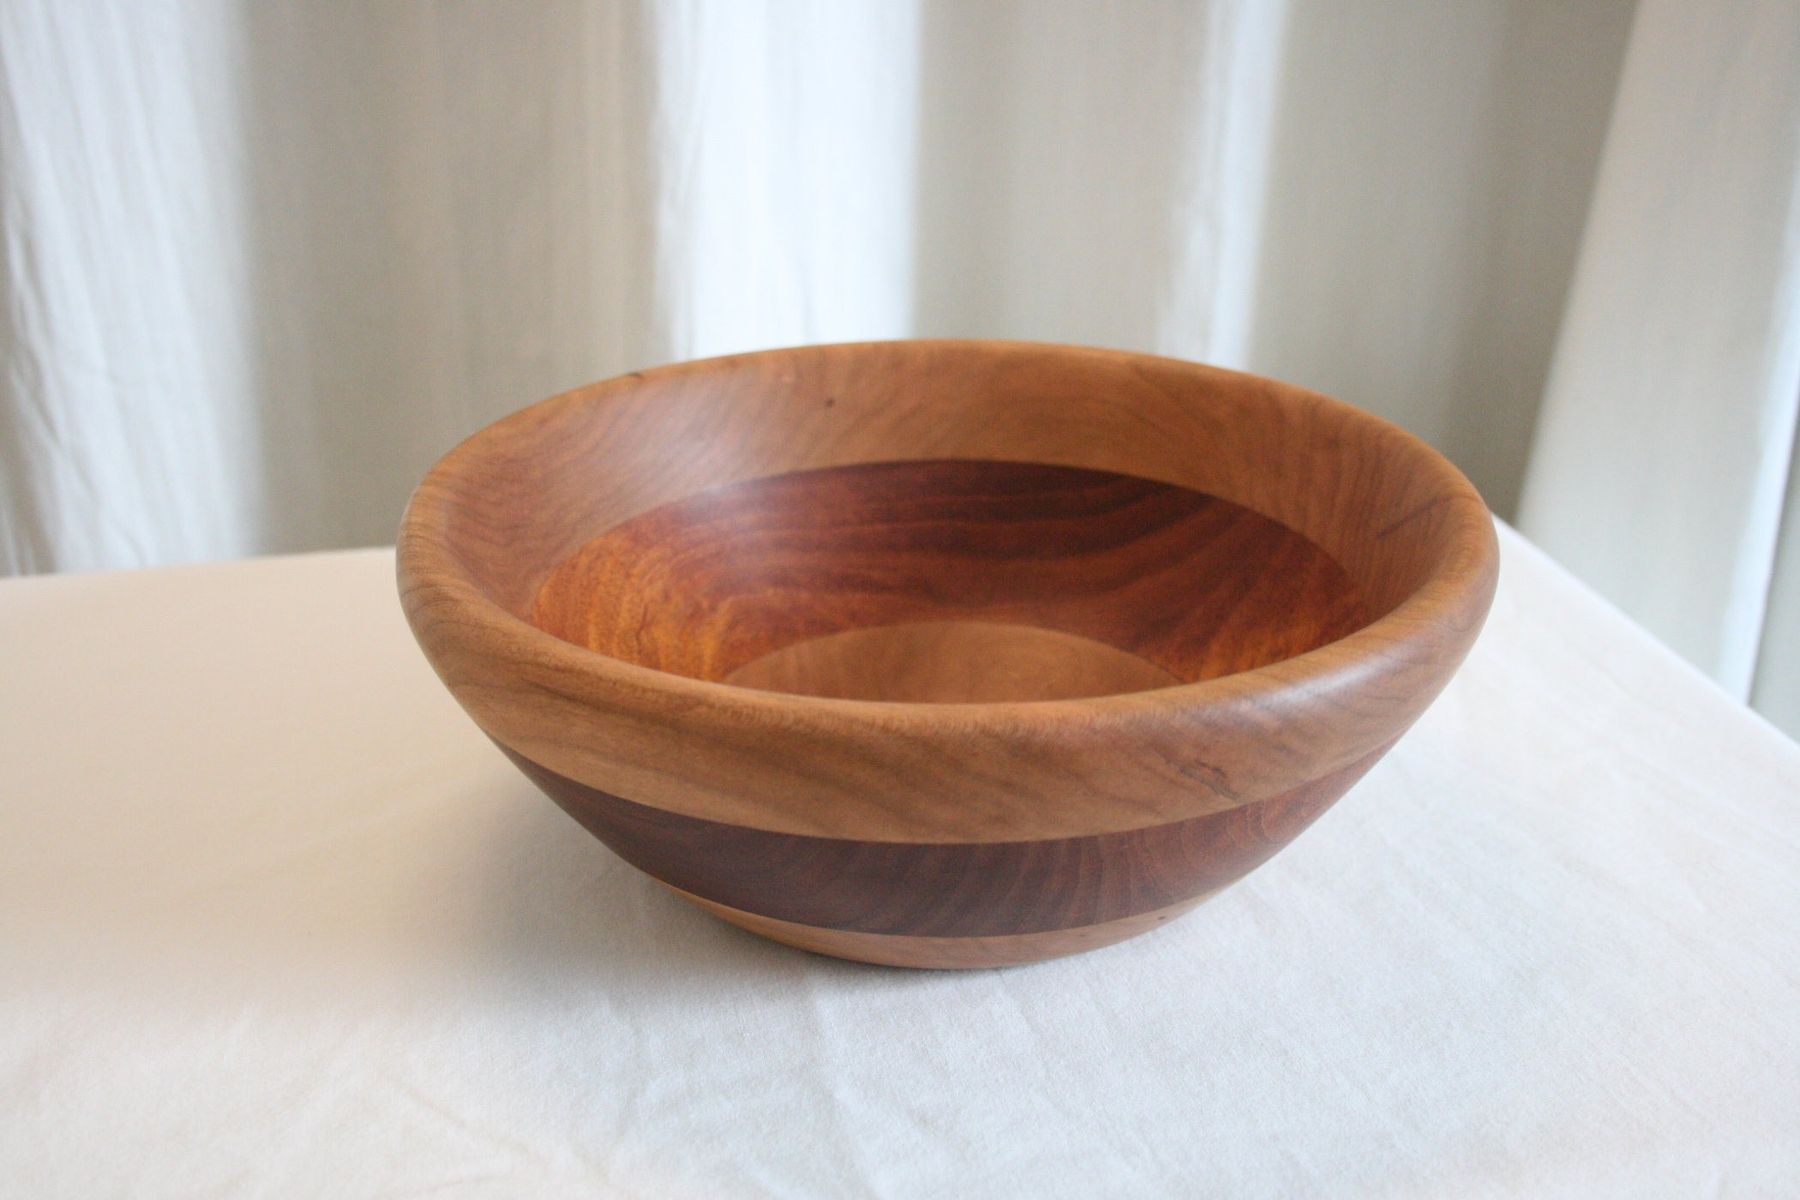 Wooden Bowl Designs - Wooden Designs